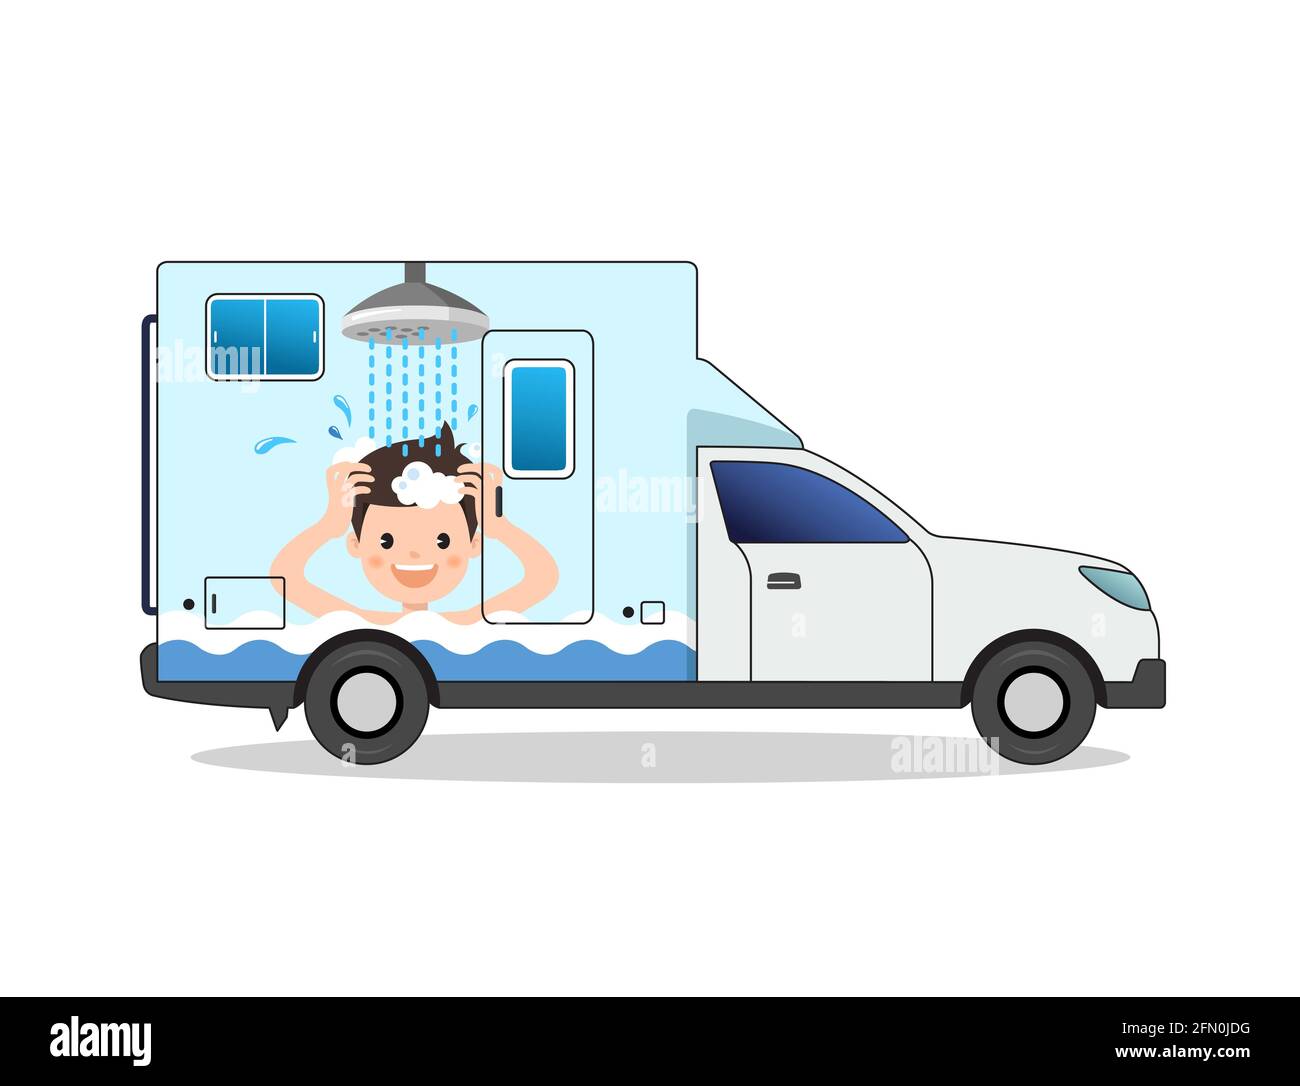 Shower person drawn portable bath car vector illustration Stock Vector